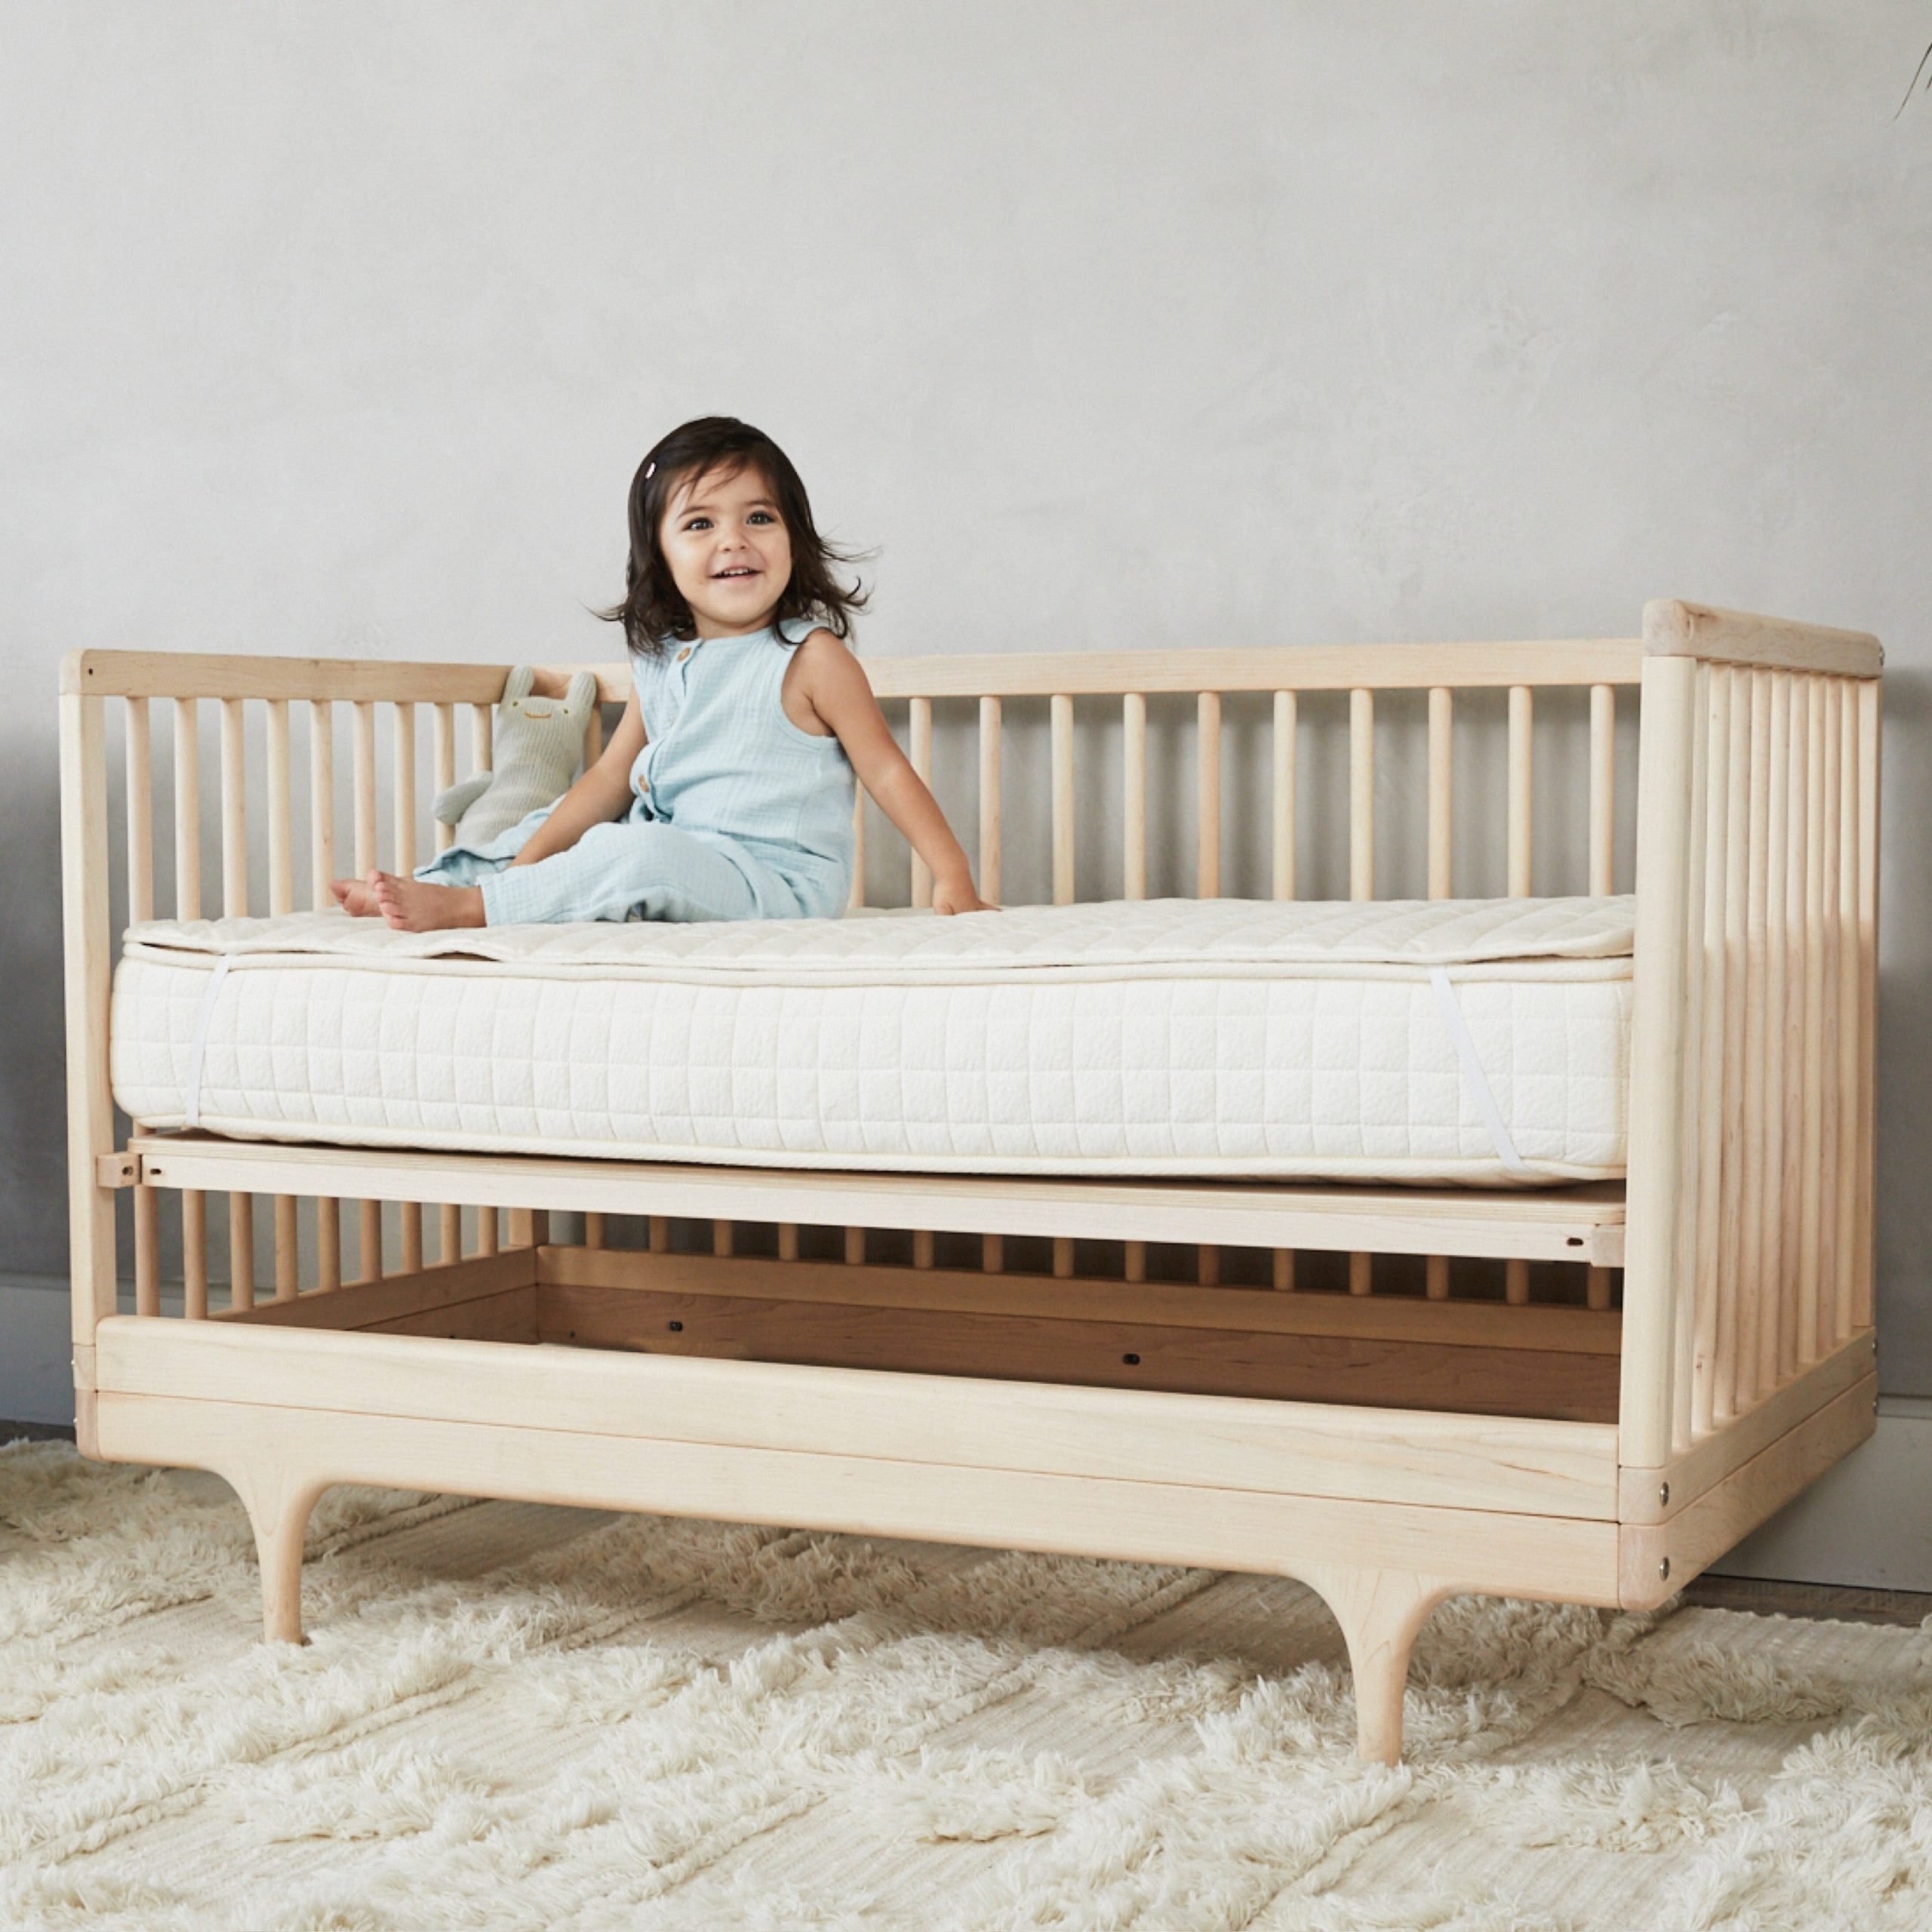 Crib Mattress Size Toddler Bed / Convertible Crib Mattress Size Online ...